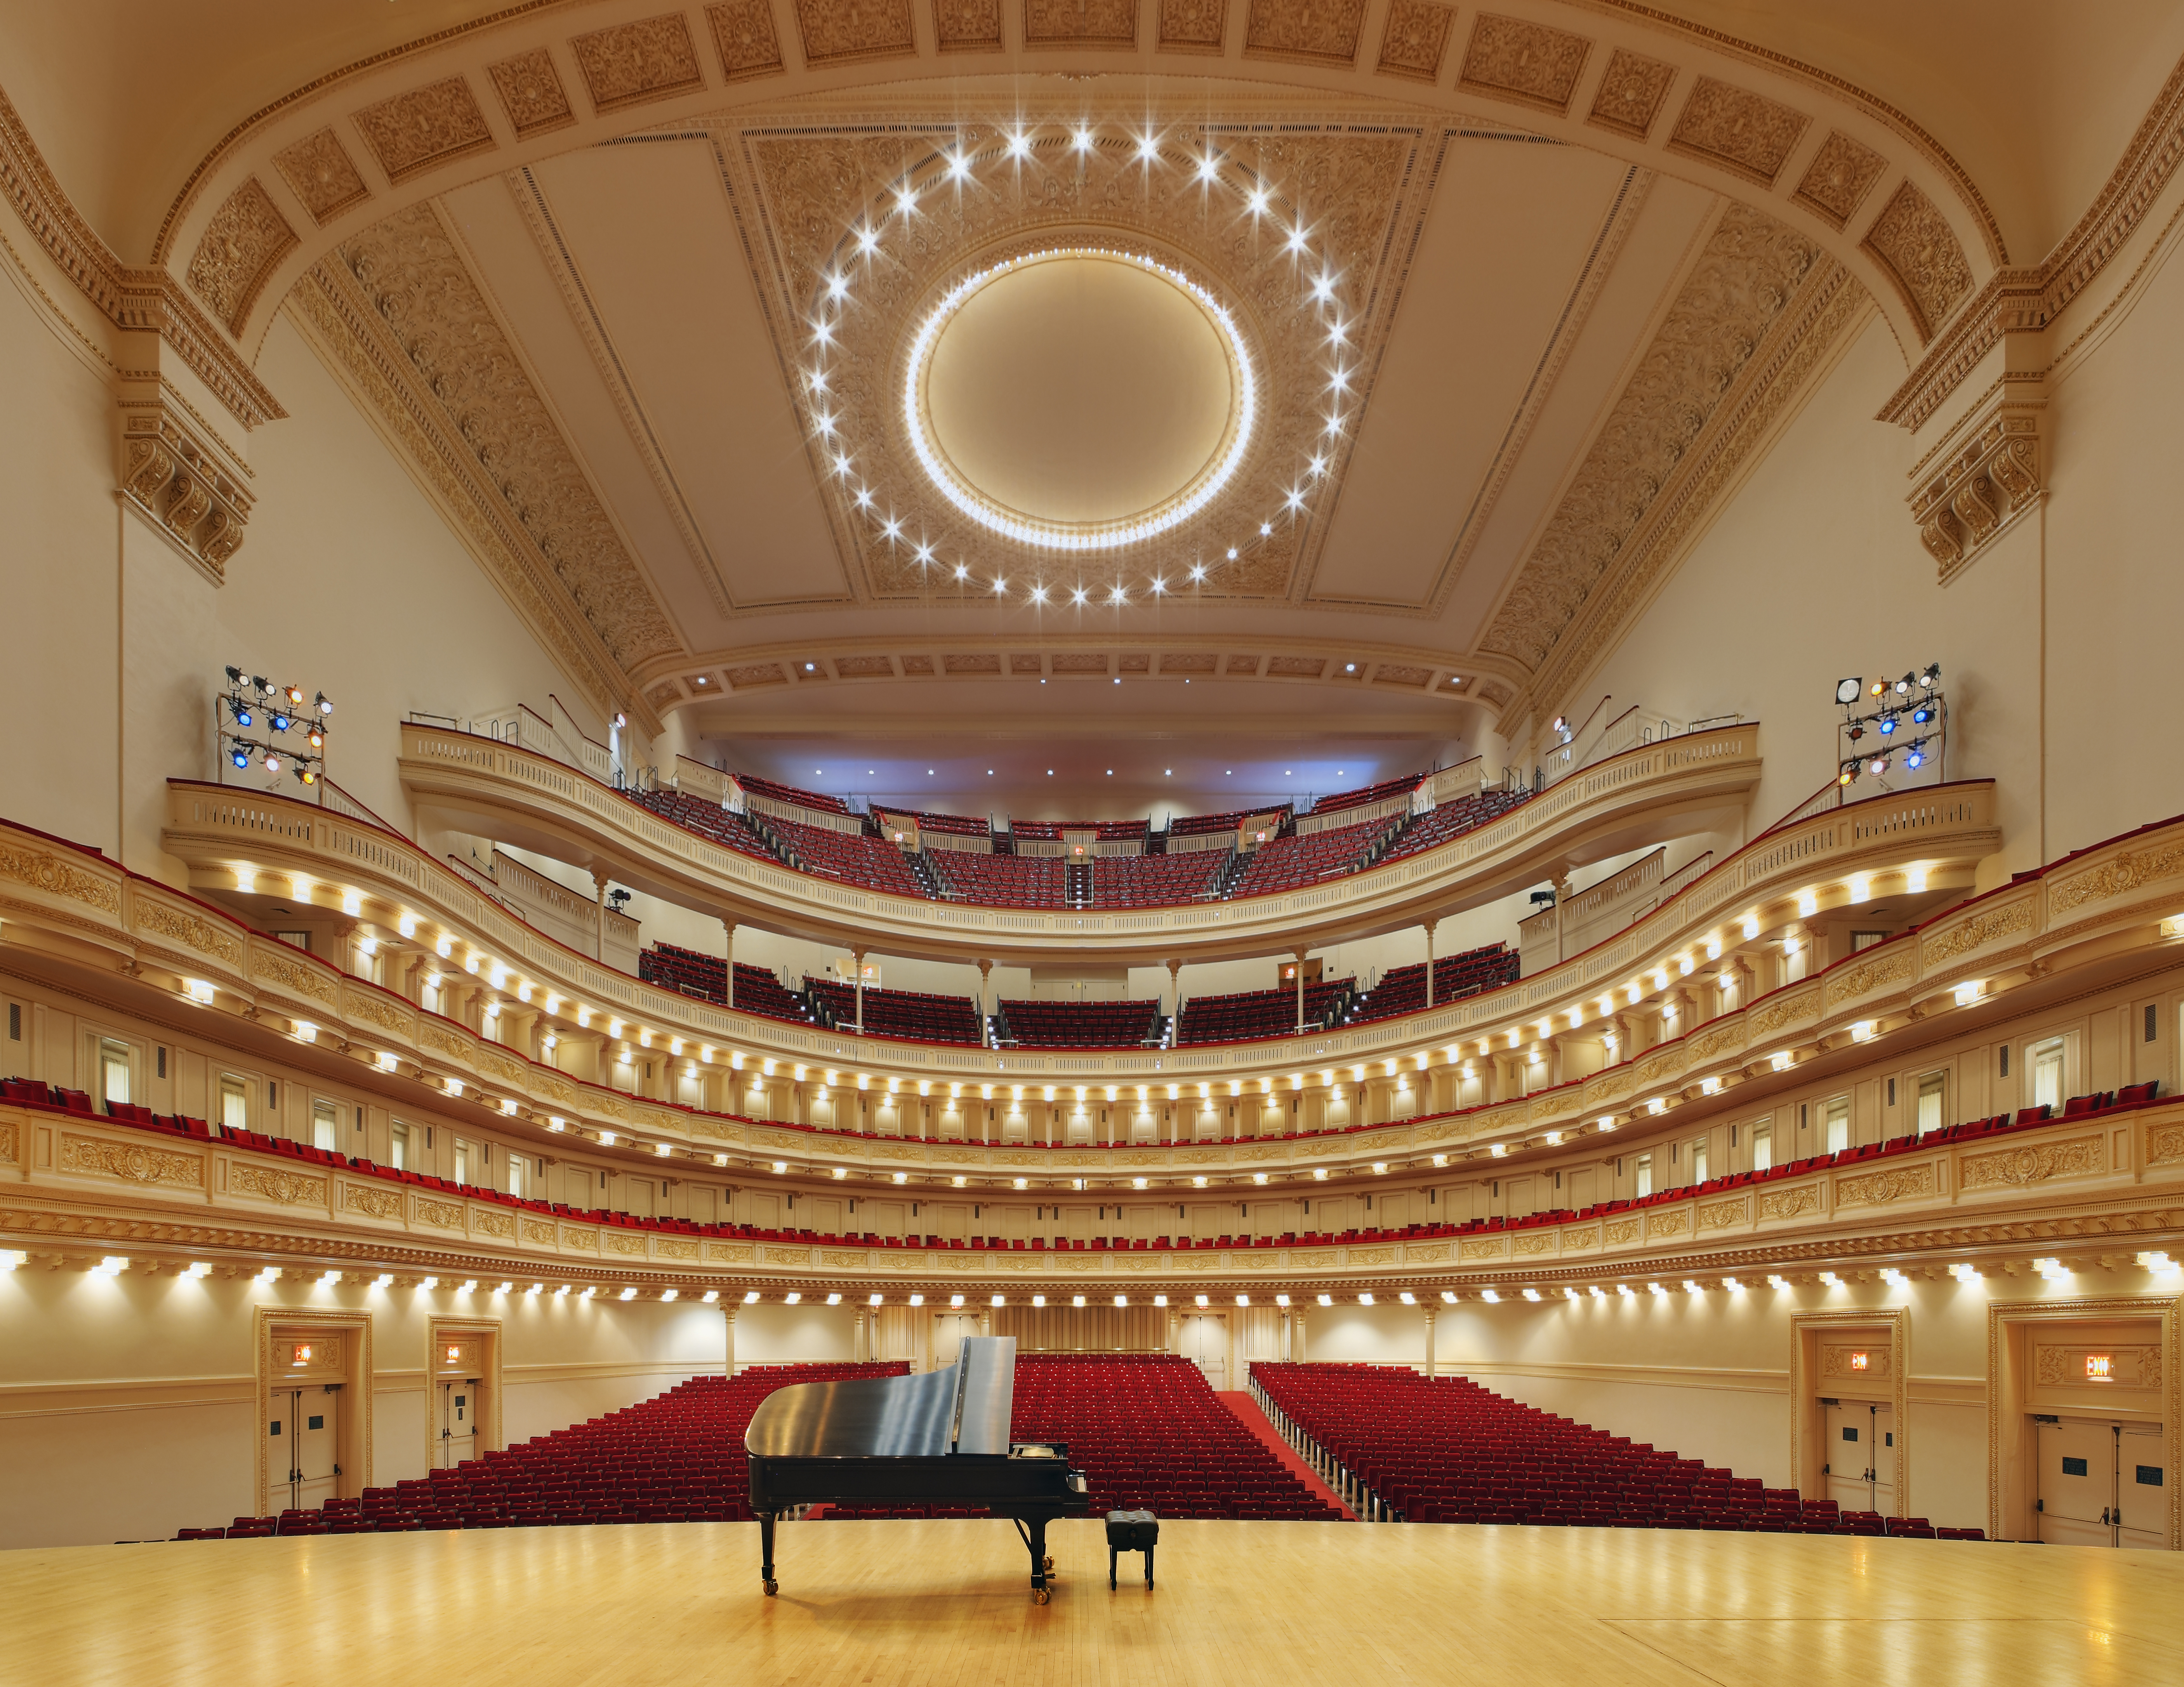 Isaac Stern Auditorium / Ronald O. Perelman Stage at Carnegie Hall. 